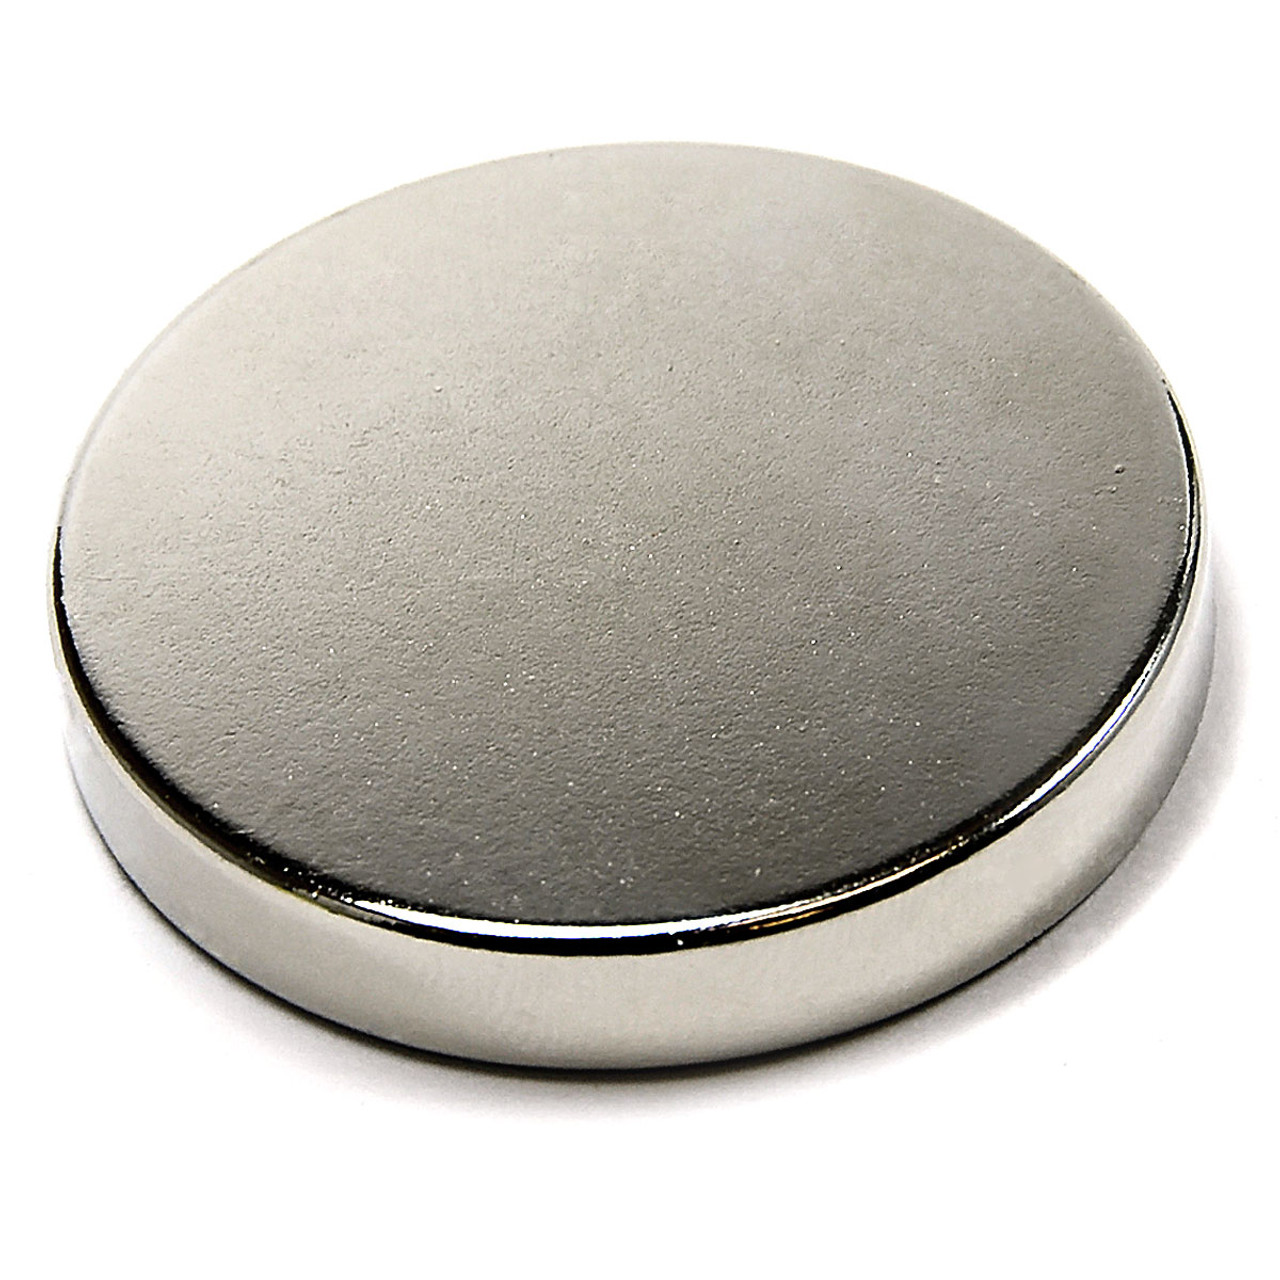 Disc Neodymium Magnets